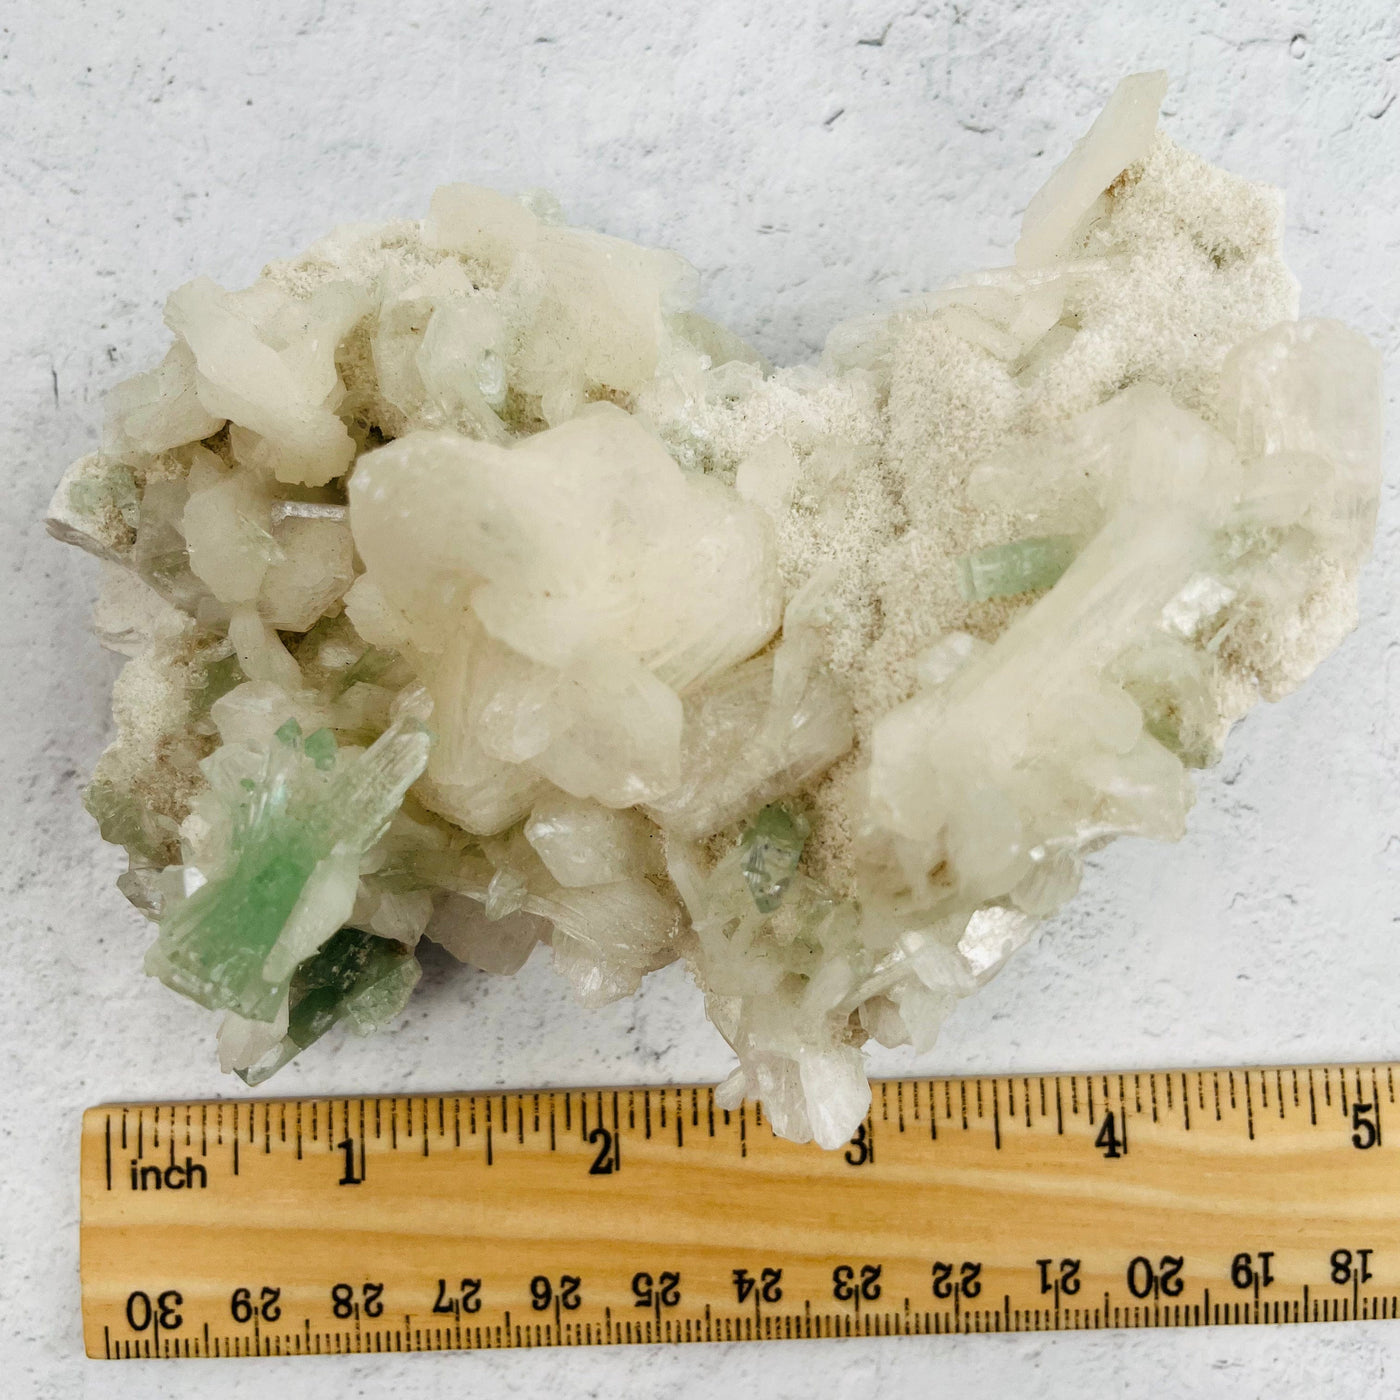 Green Apophyllite with Stilbite Zeolites - With Measurements